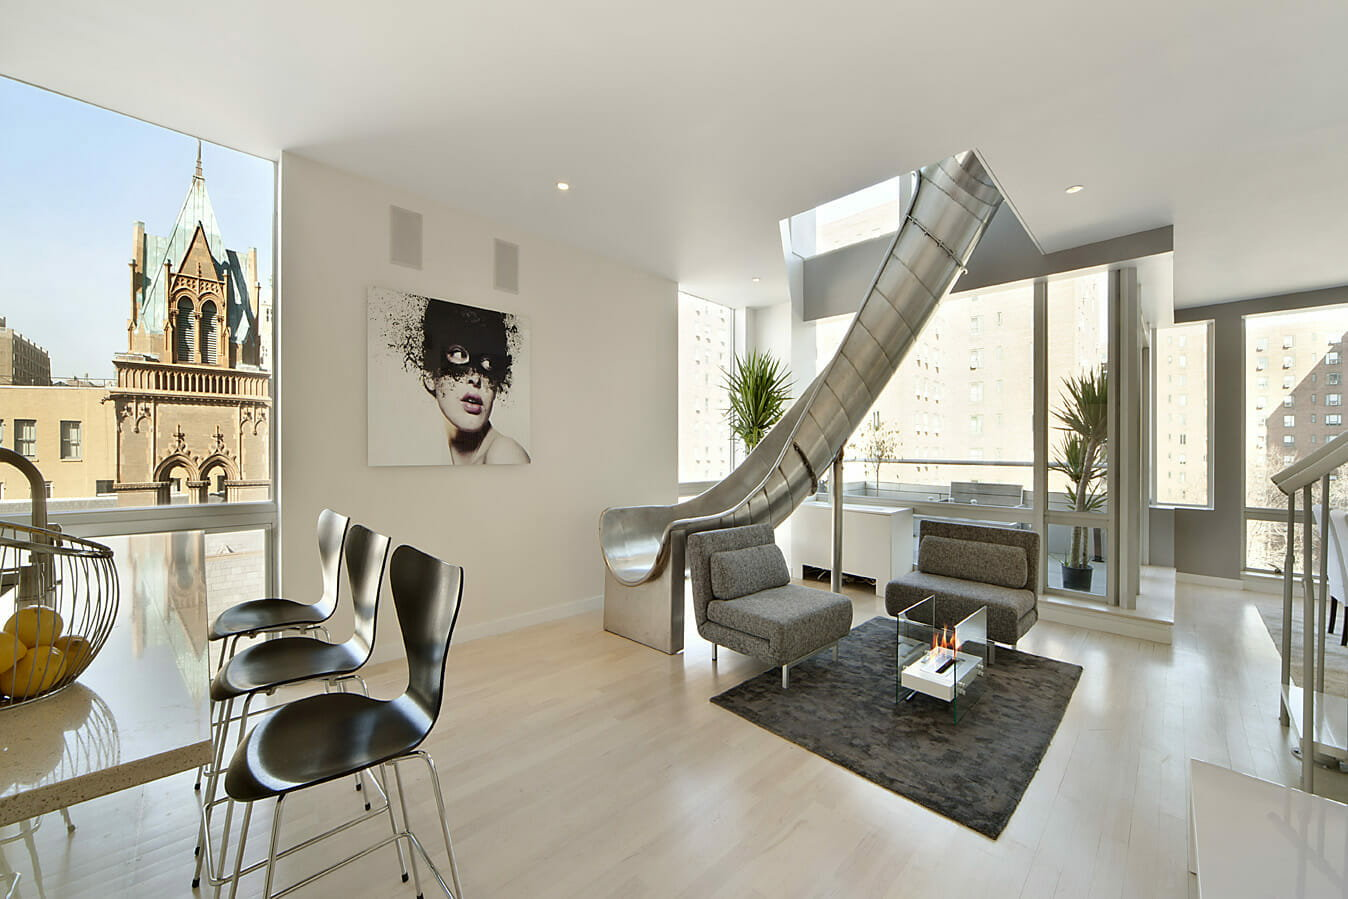 NYC Loft Interior Design: How to Achieve New York Loft Decorating